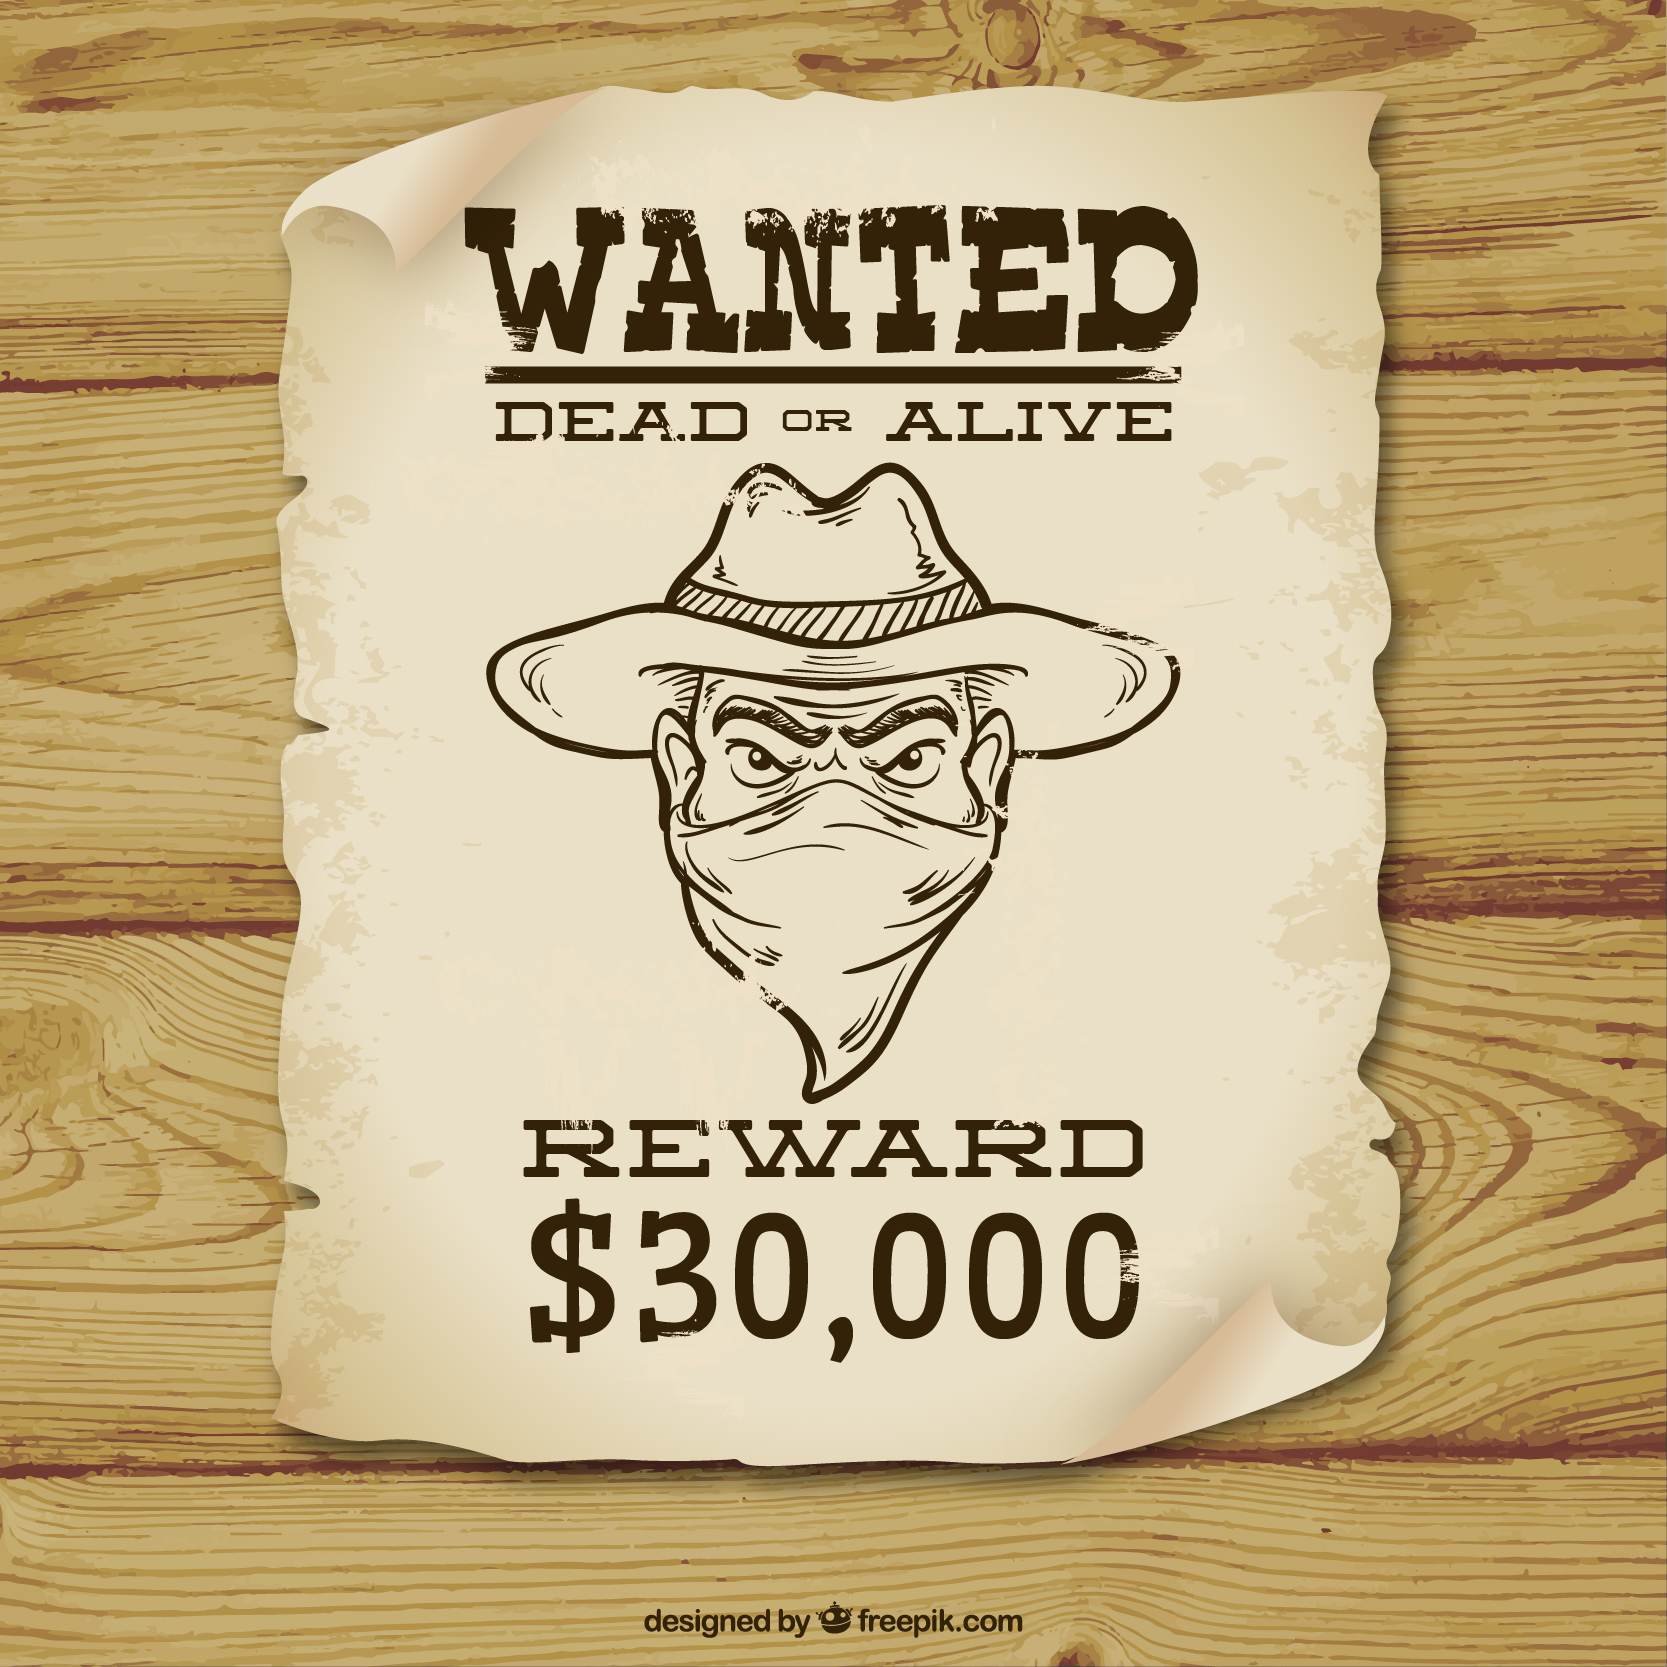 Wanted ковбой